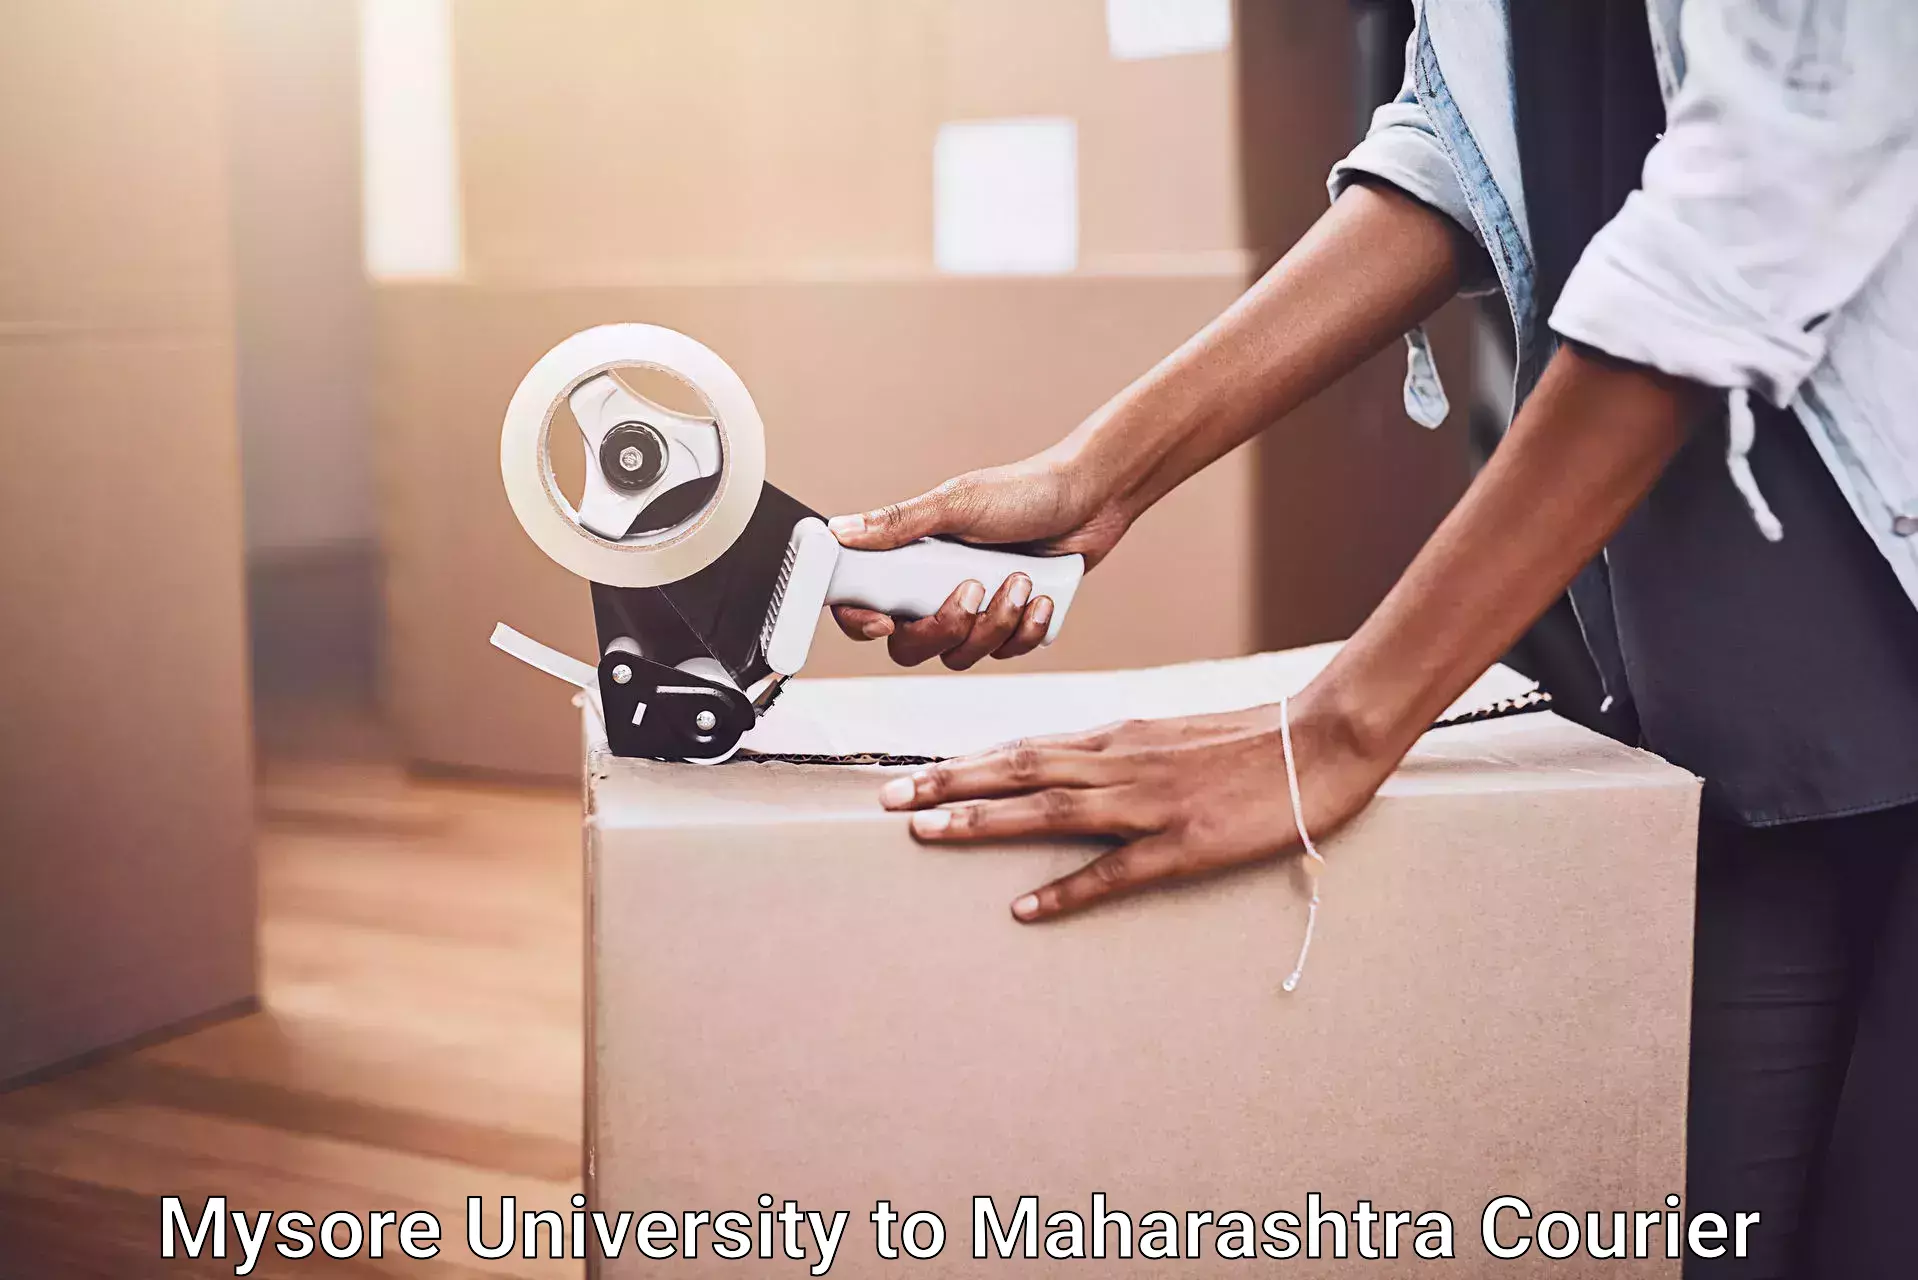 Personalized moving service Mysore University to Maharashtra